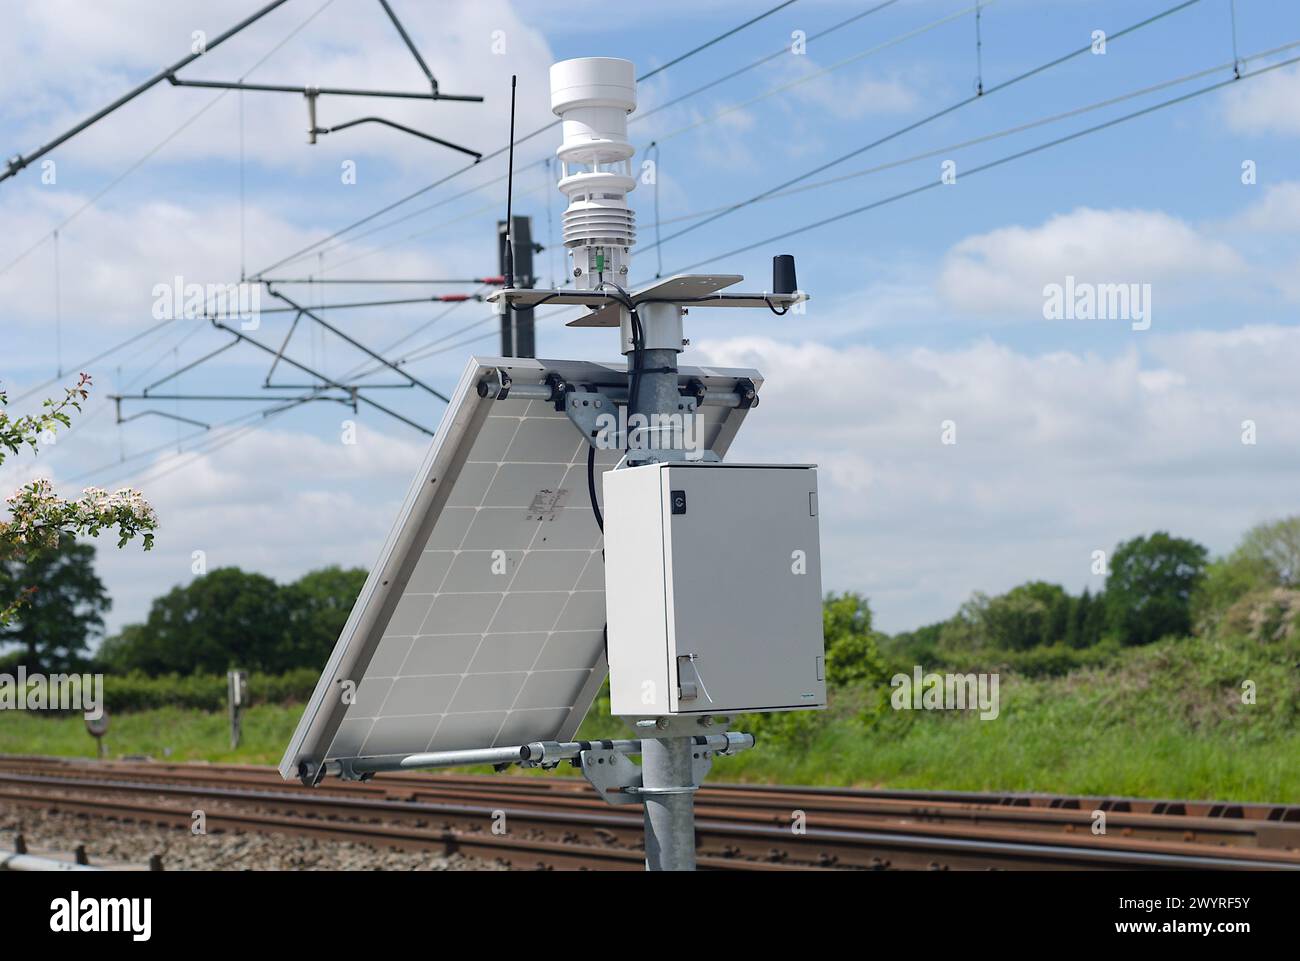 Railway weather monitor apparatus Stock Photo